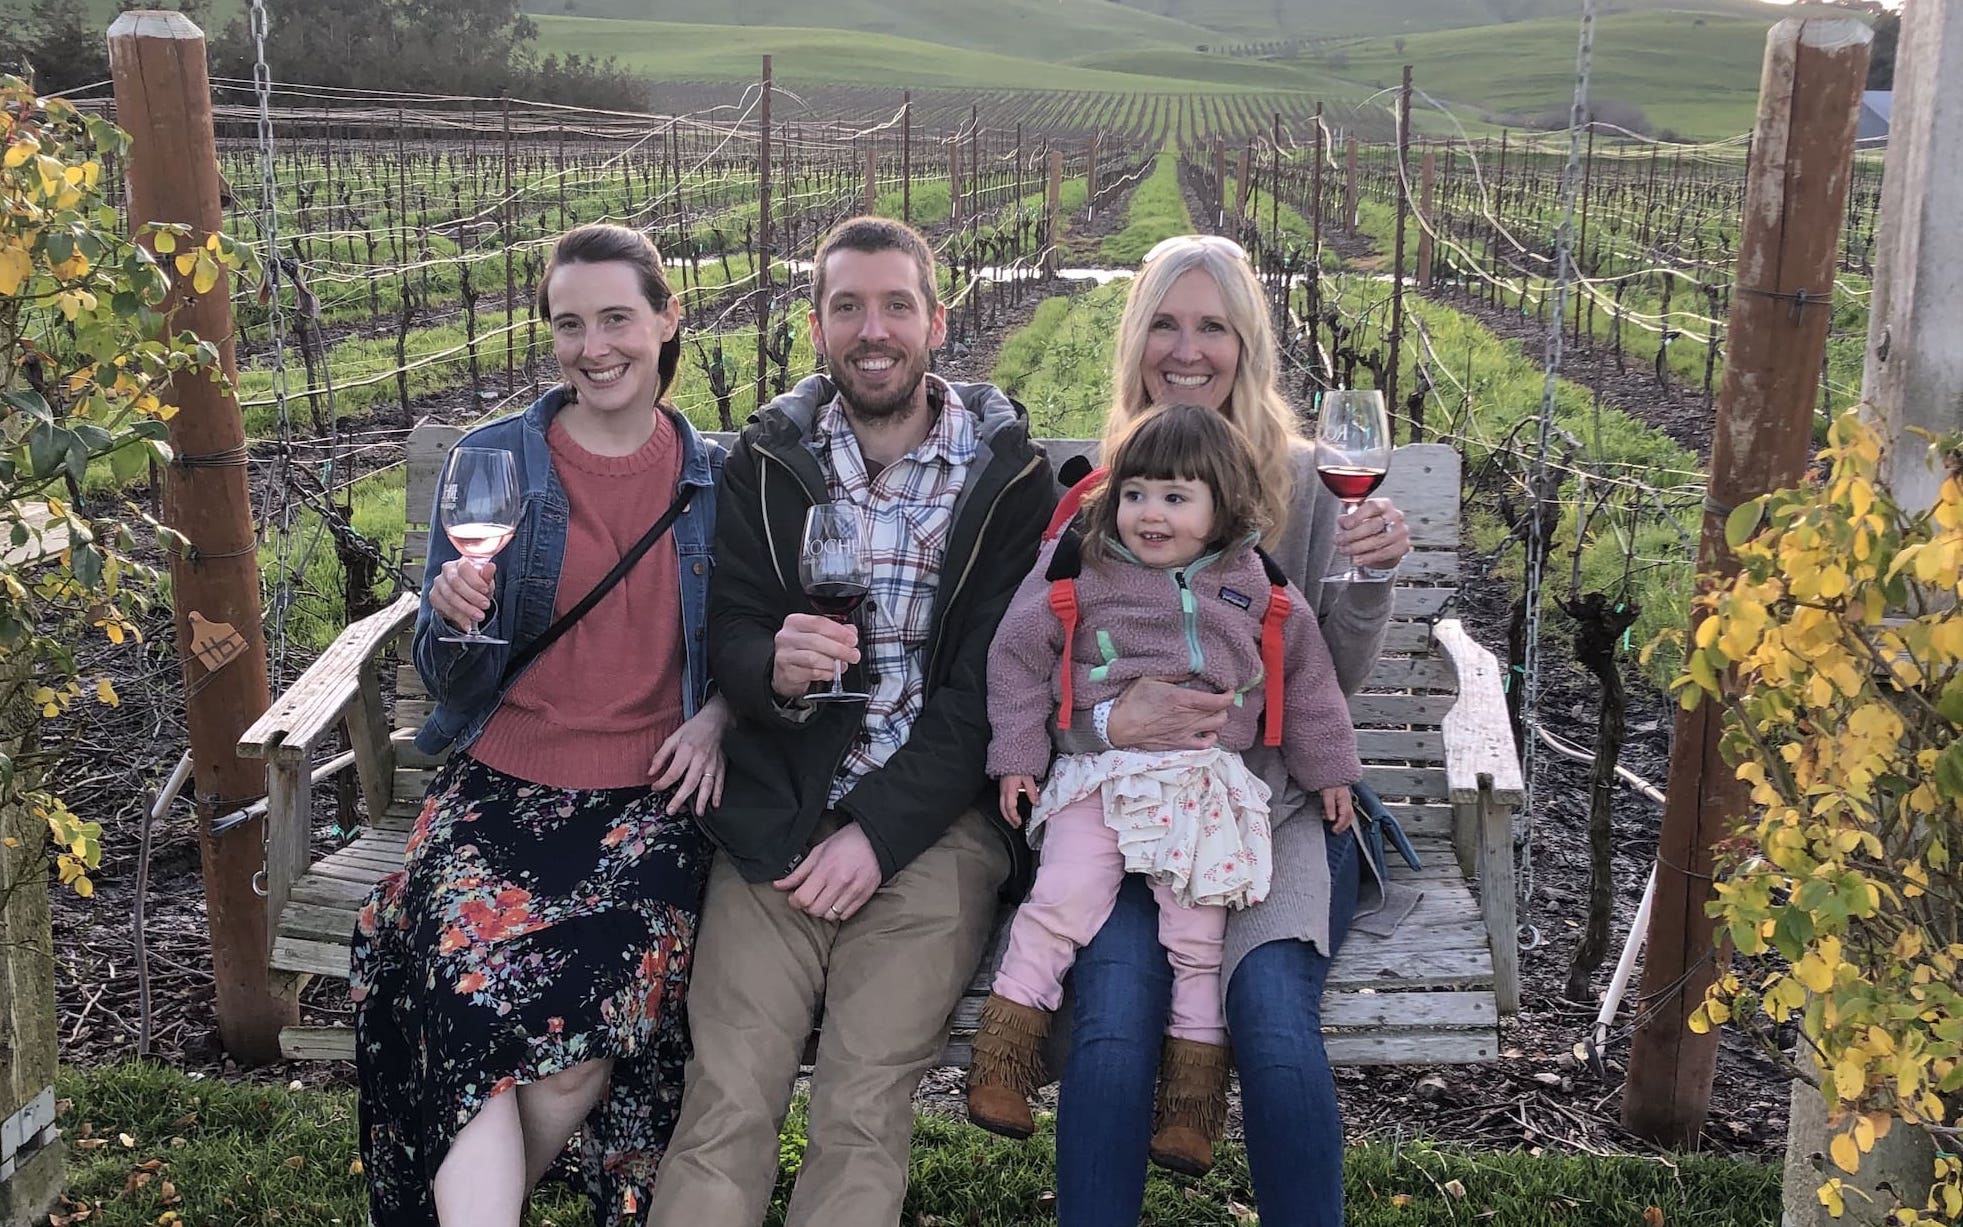 Roche Winery is Family Friendly